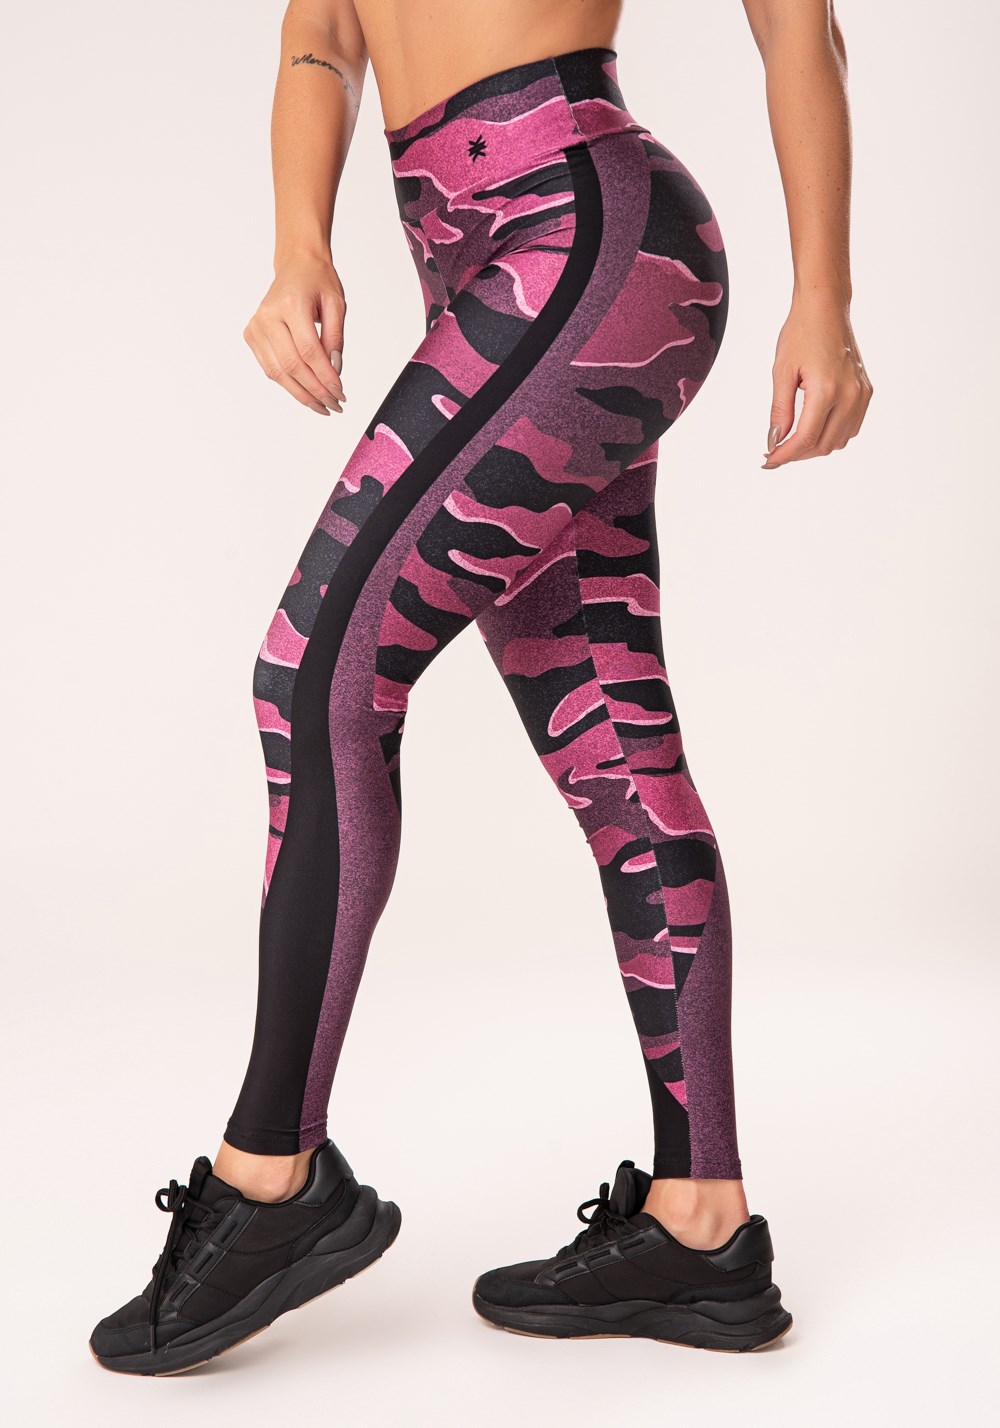 Legging fitness feminina estampada camuflado rosa e preto printed